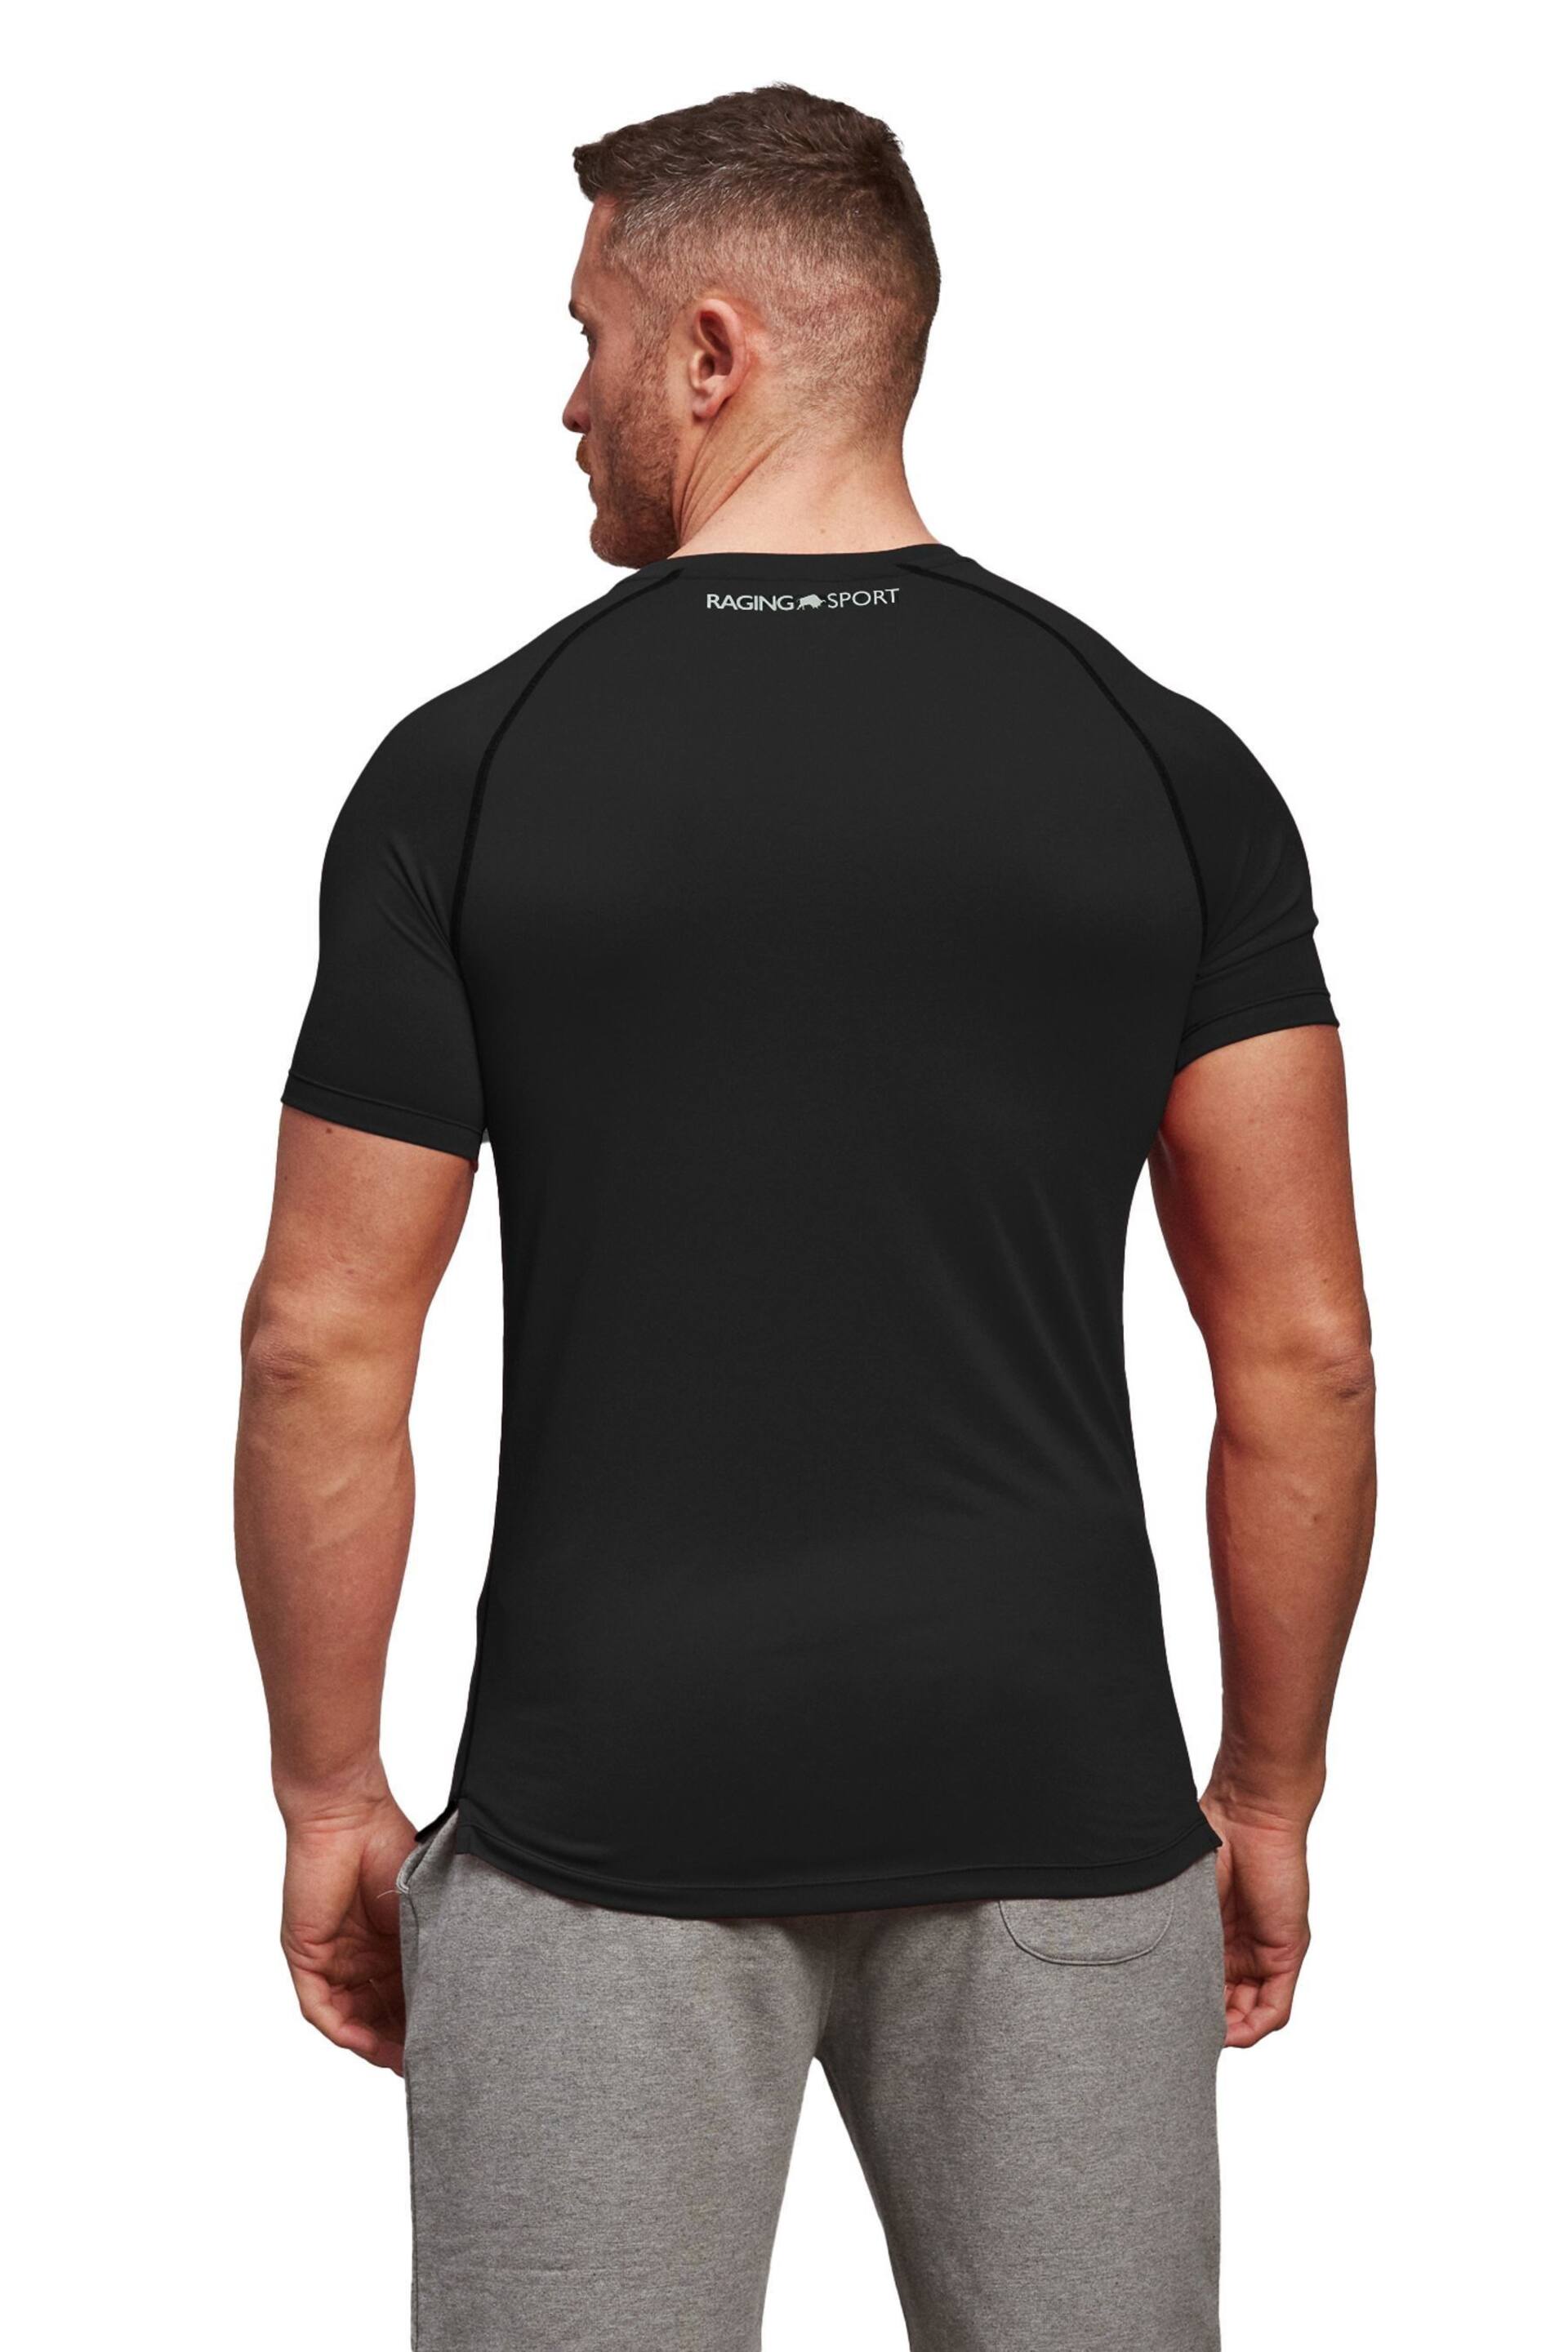 Raging Bull Performance Black T-Shirt - Image 2 of 5